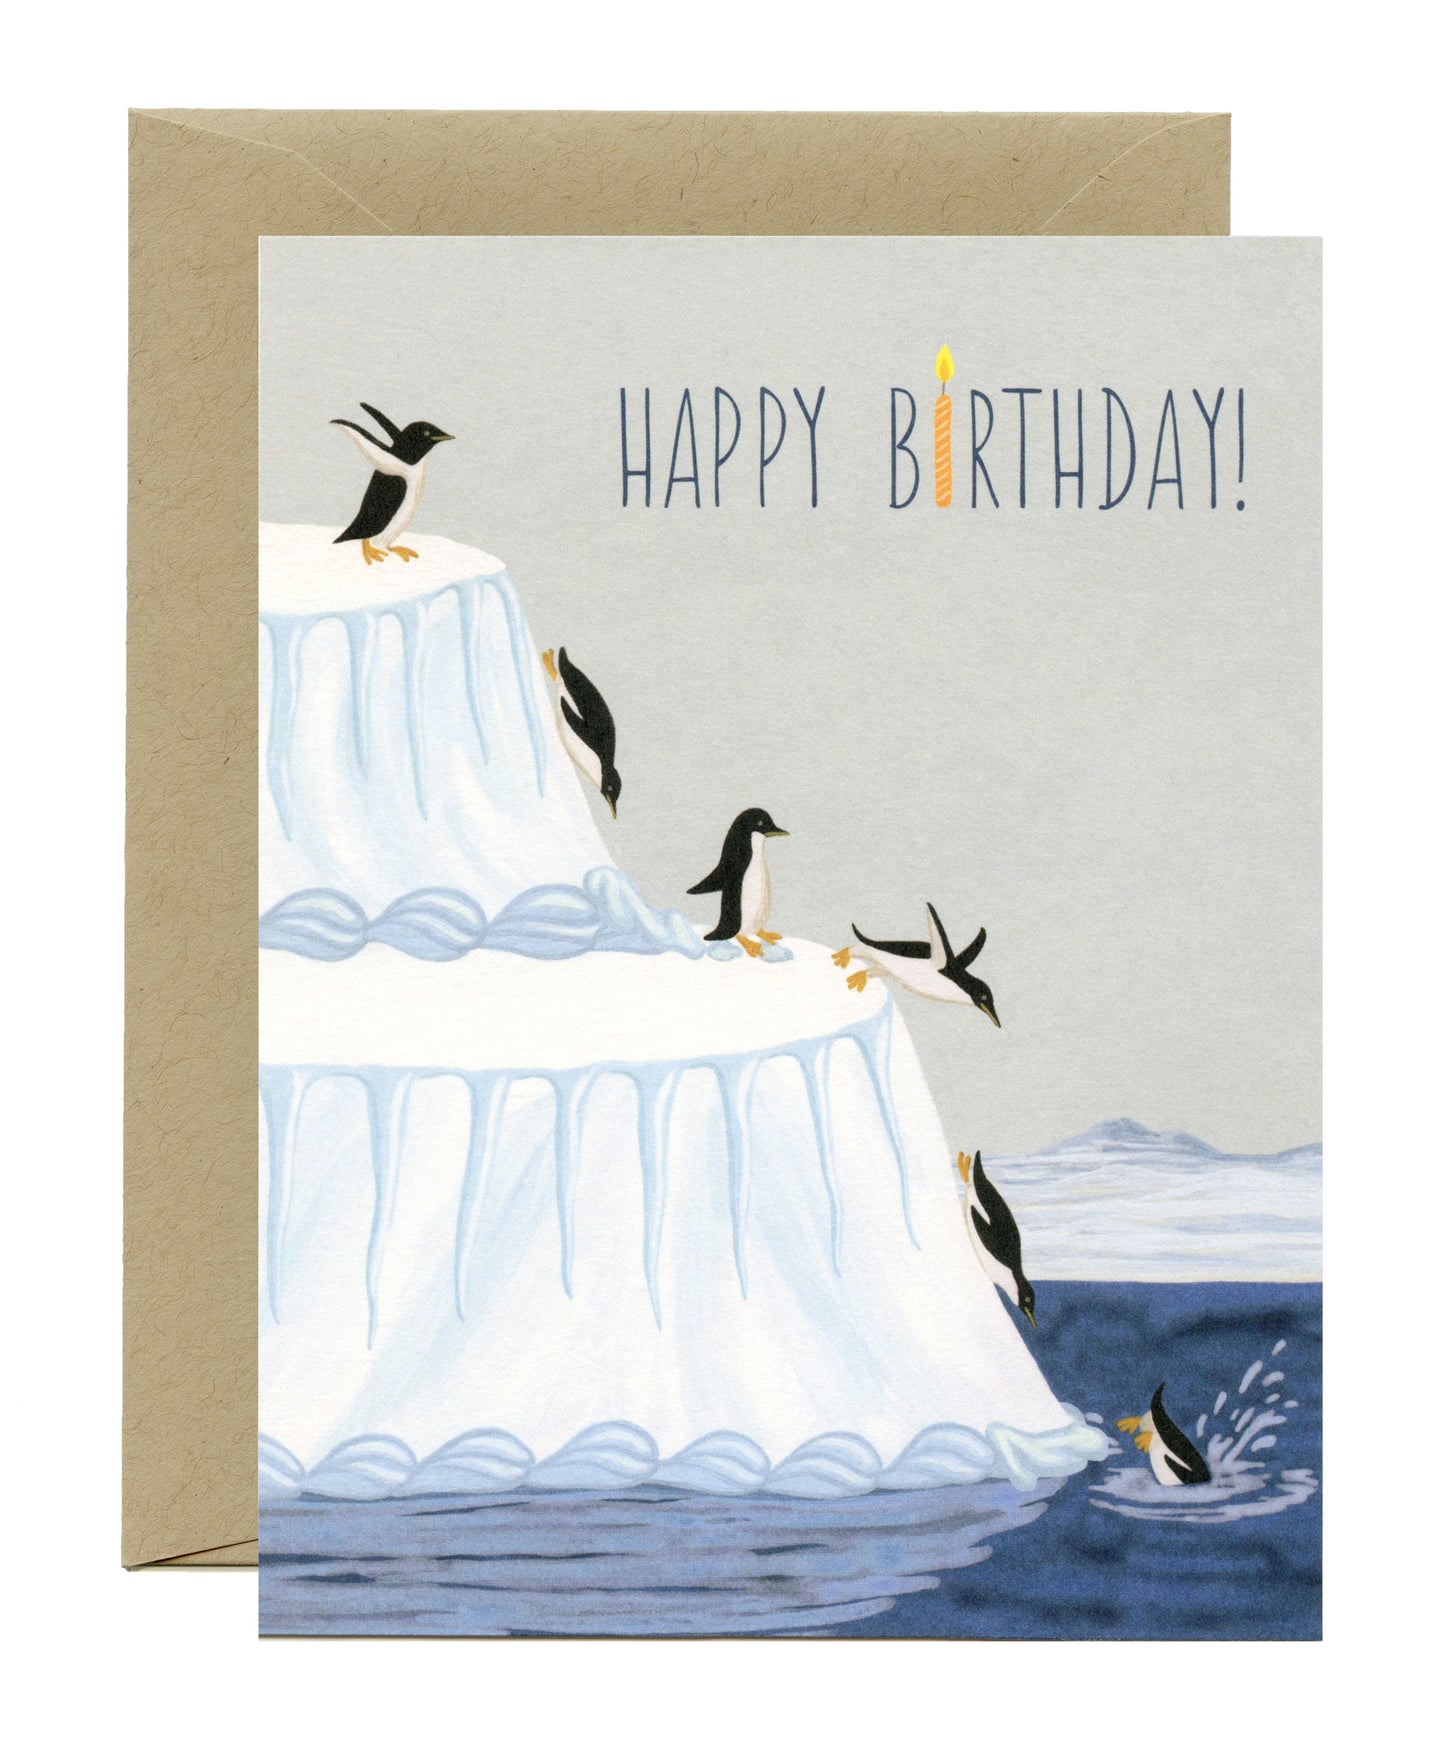 PENGUINS ON AN ICEBERG - BIRTHDAY GREETING CARD